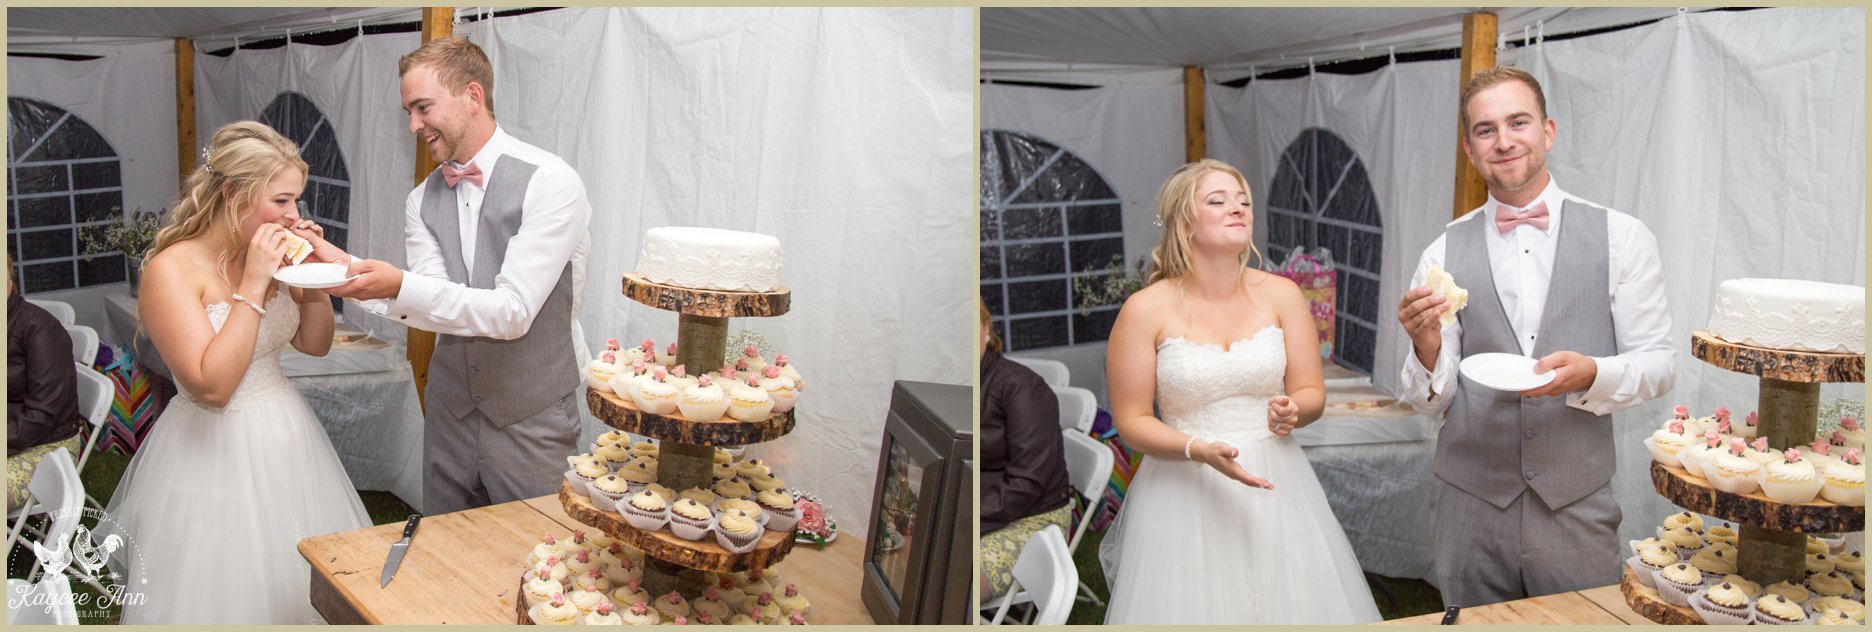 cake cutting, wedding cake, cupcake stand, feeding each other cake